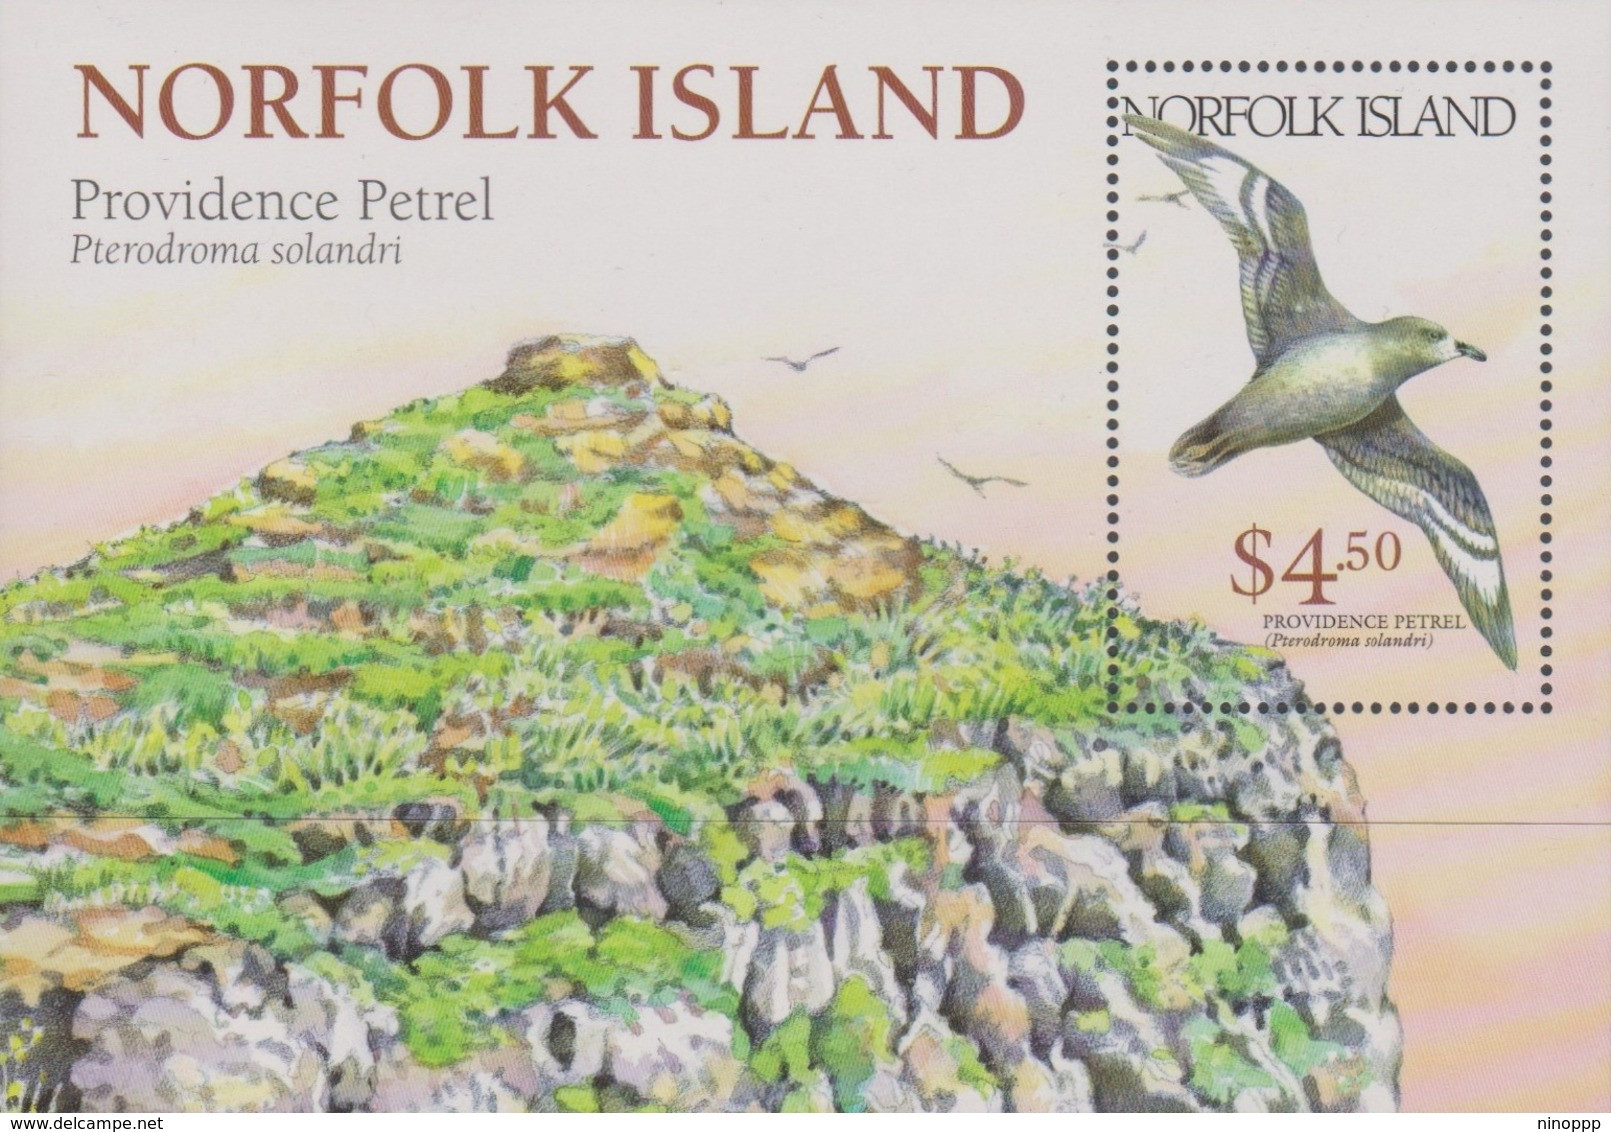 Norfolk Island ASC 689 MS 1999 Providence Petrel, Miniature Sheet, Mint Never Hinged - Ile Norfolk